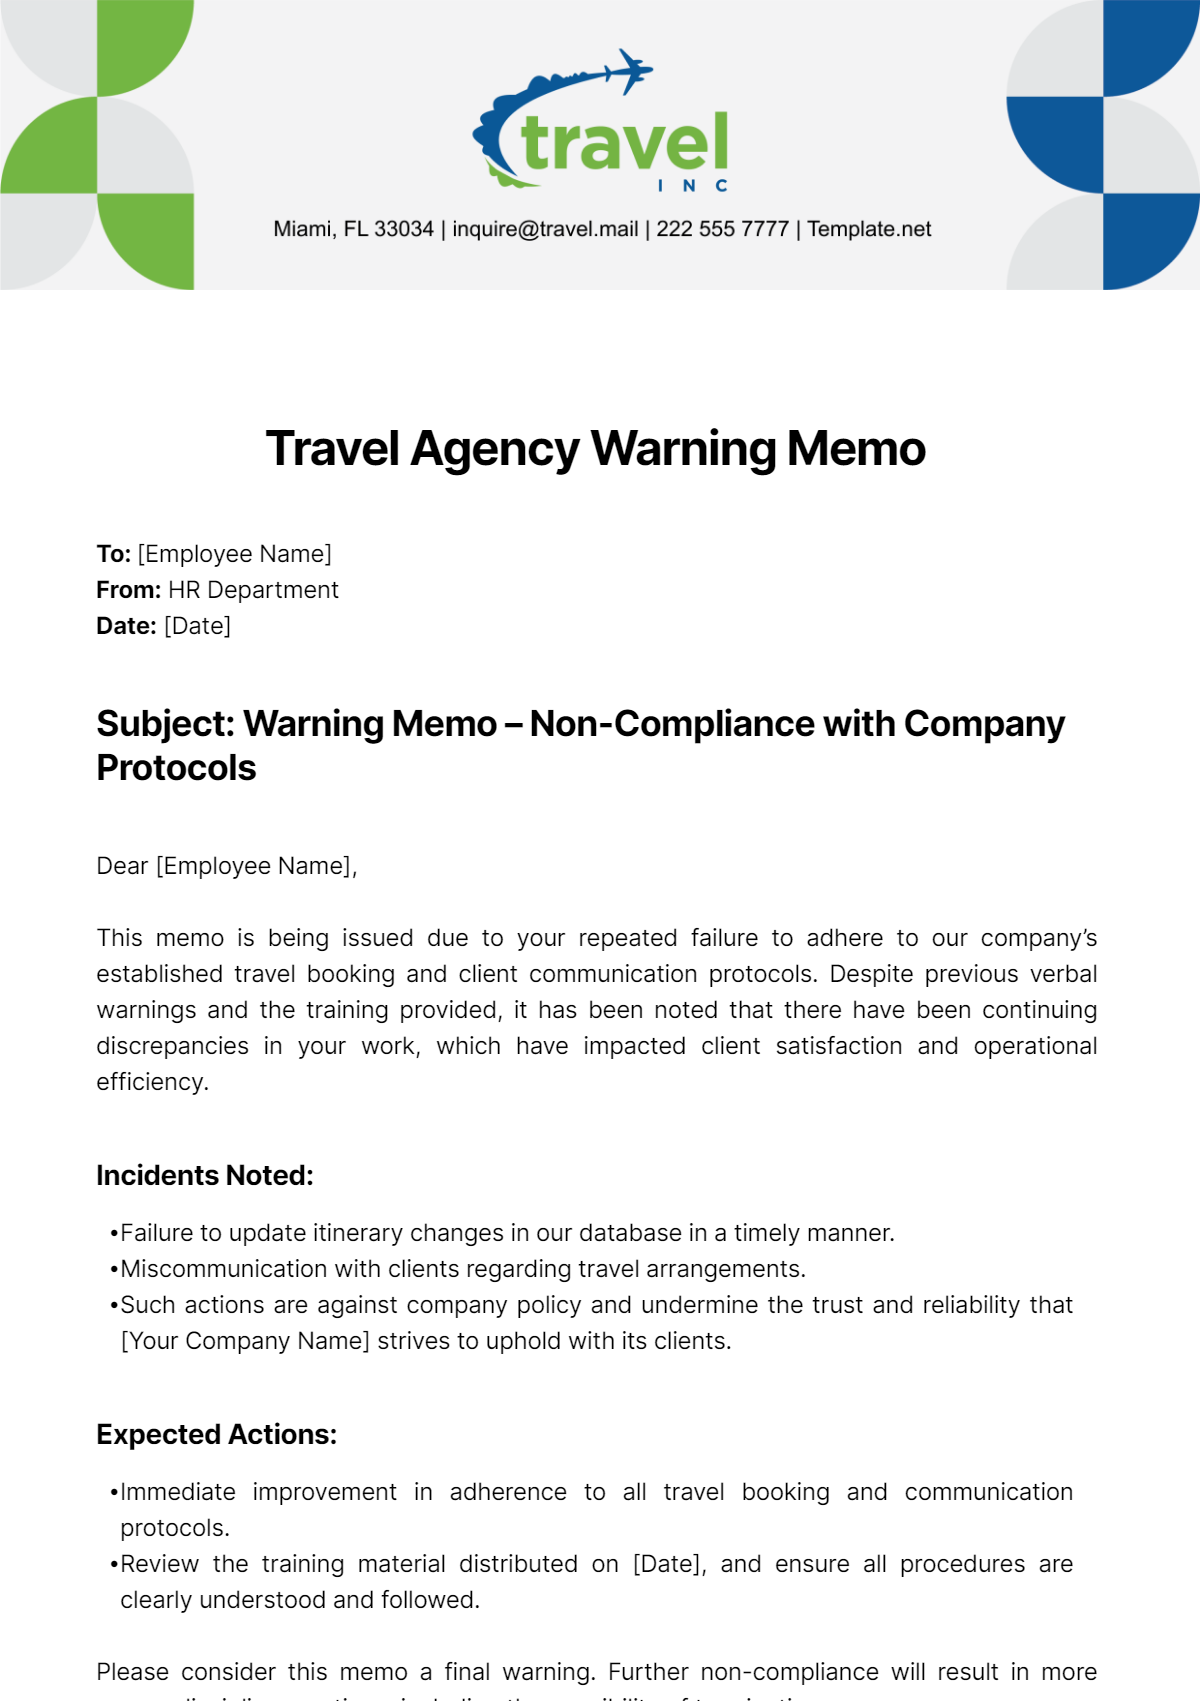 Travel Agency Warning Memo Template